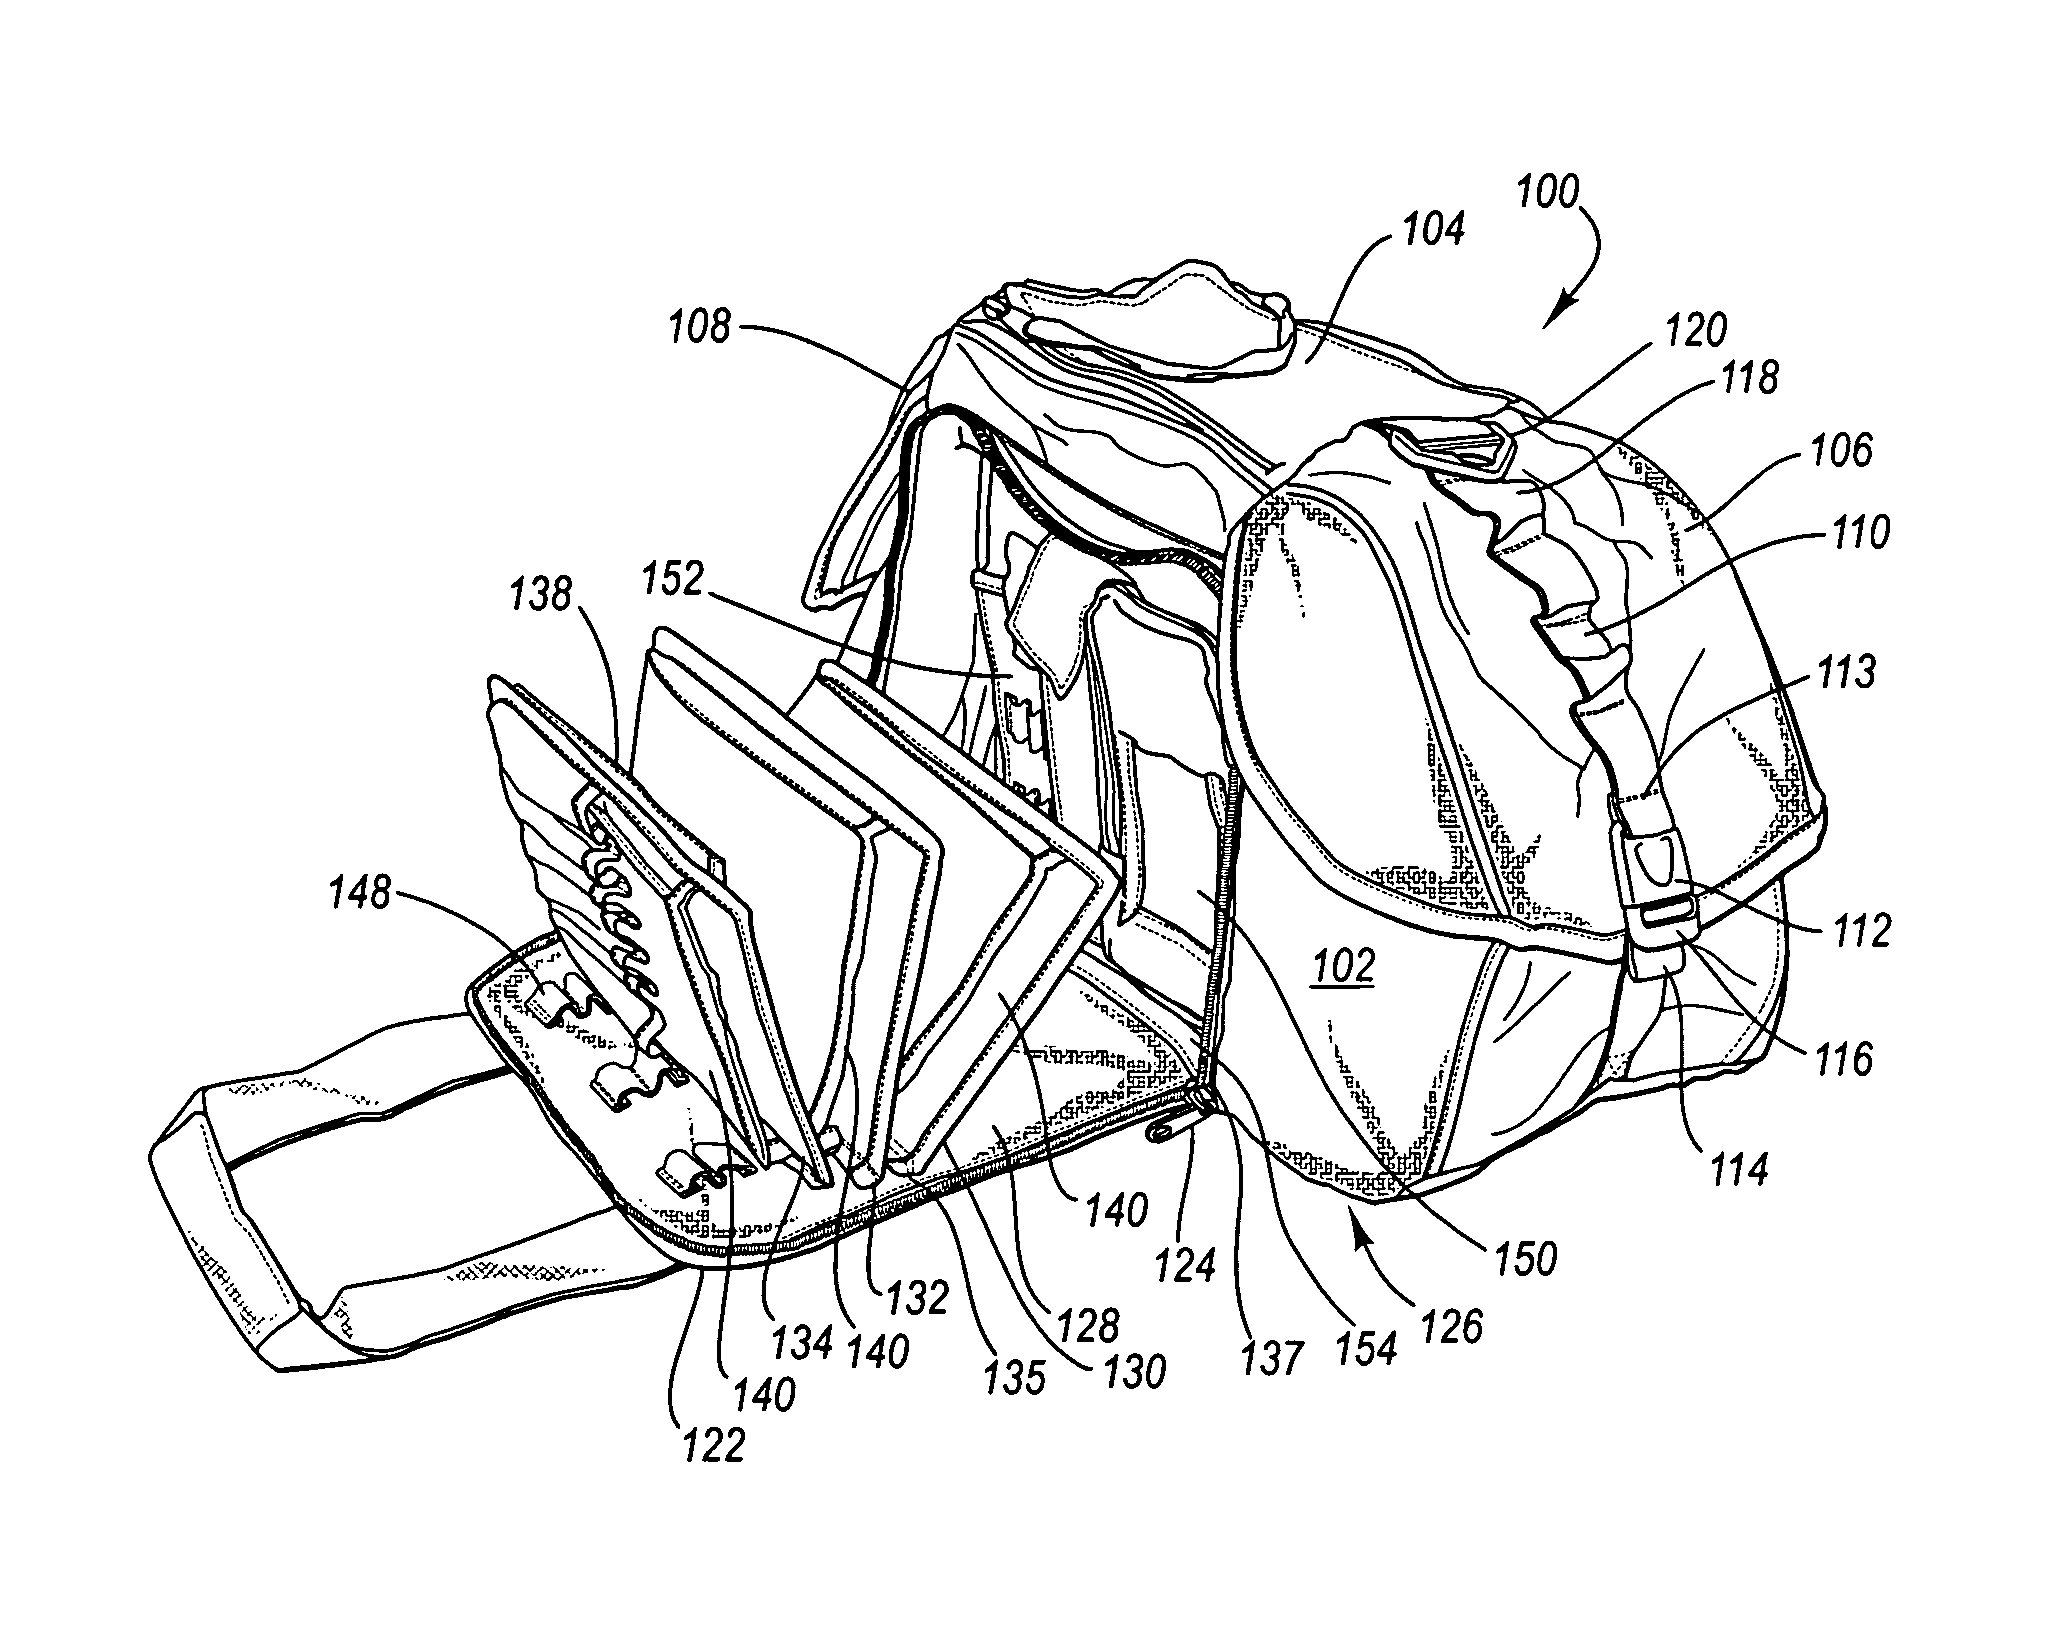 Flight bag apparatus and method